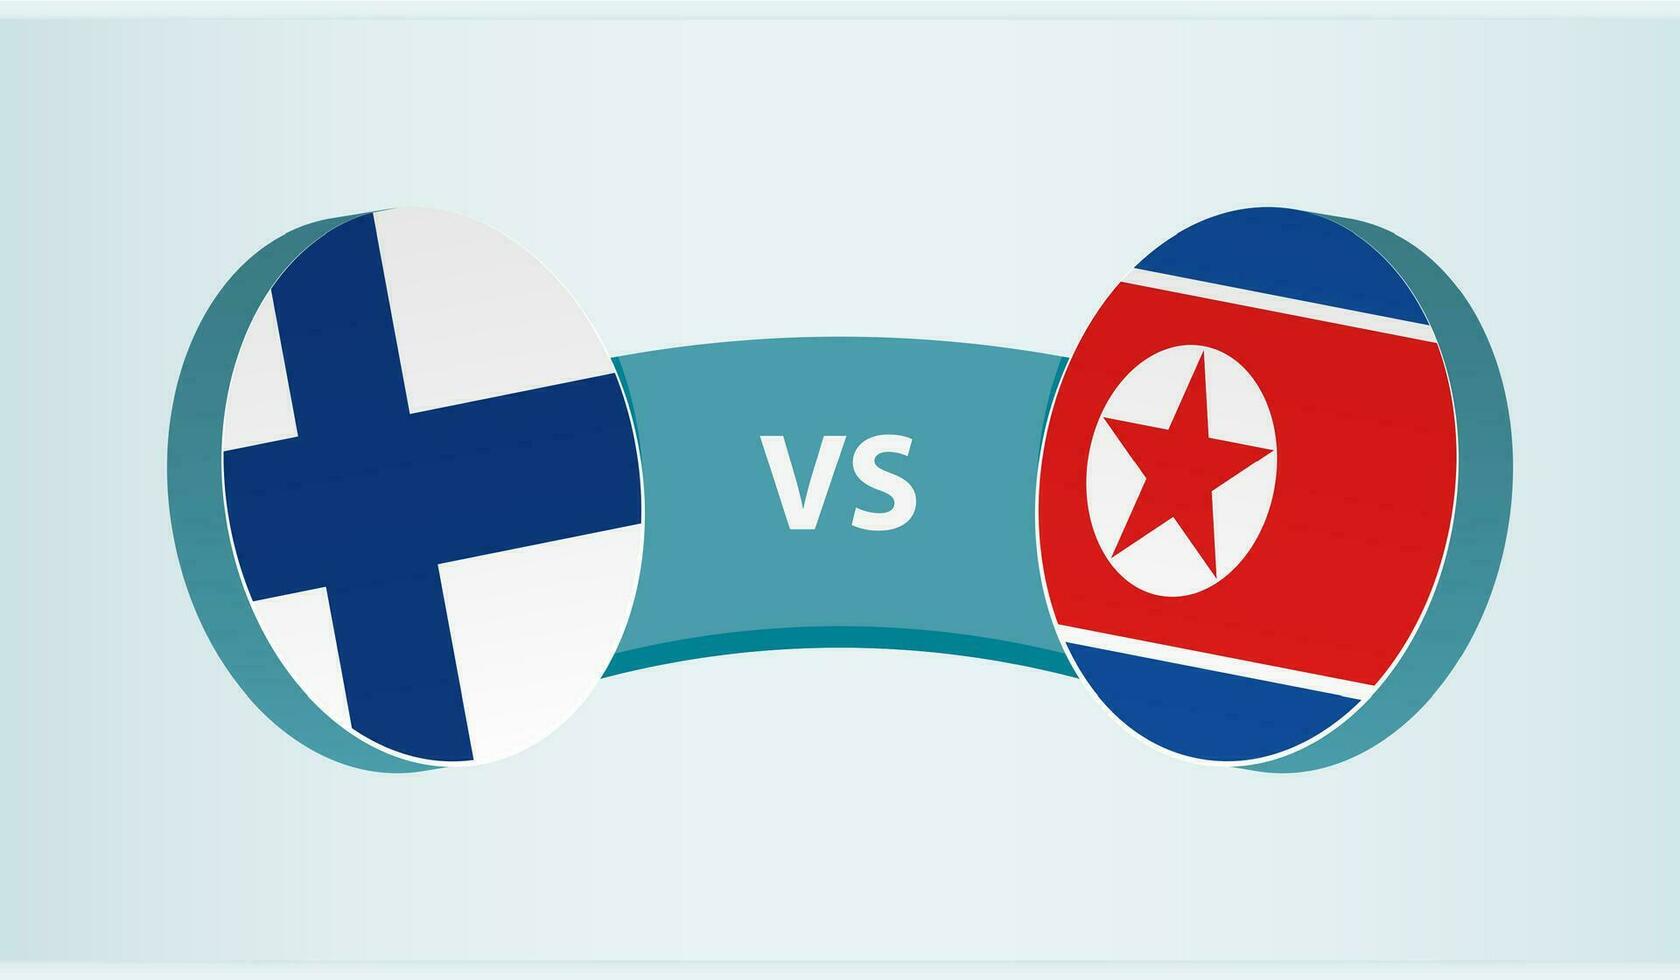 Finland versus North Korea, team sports competition concept. vector